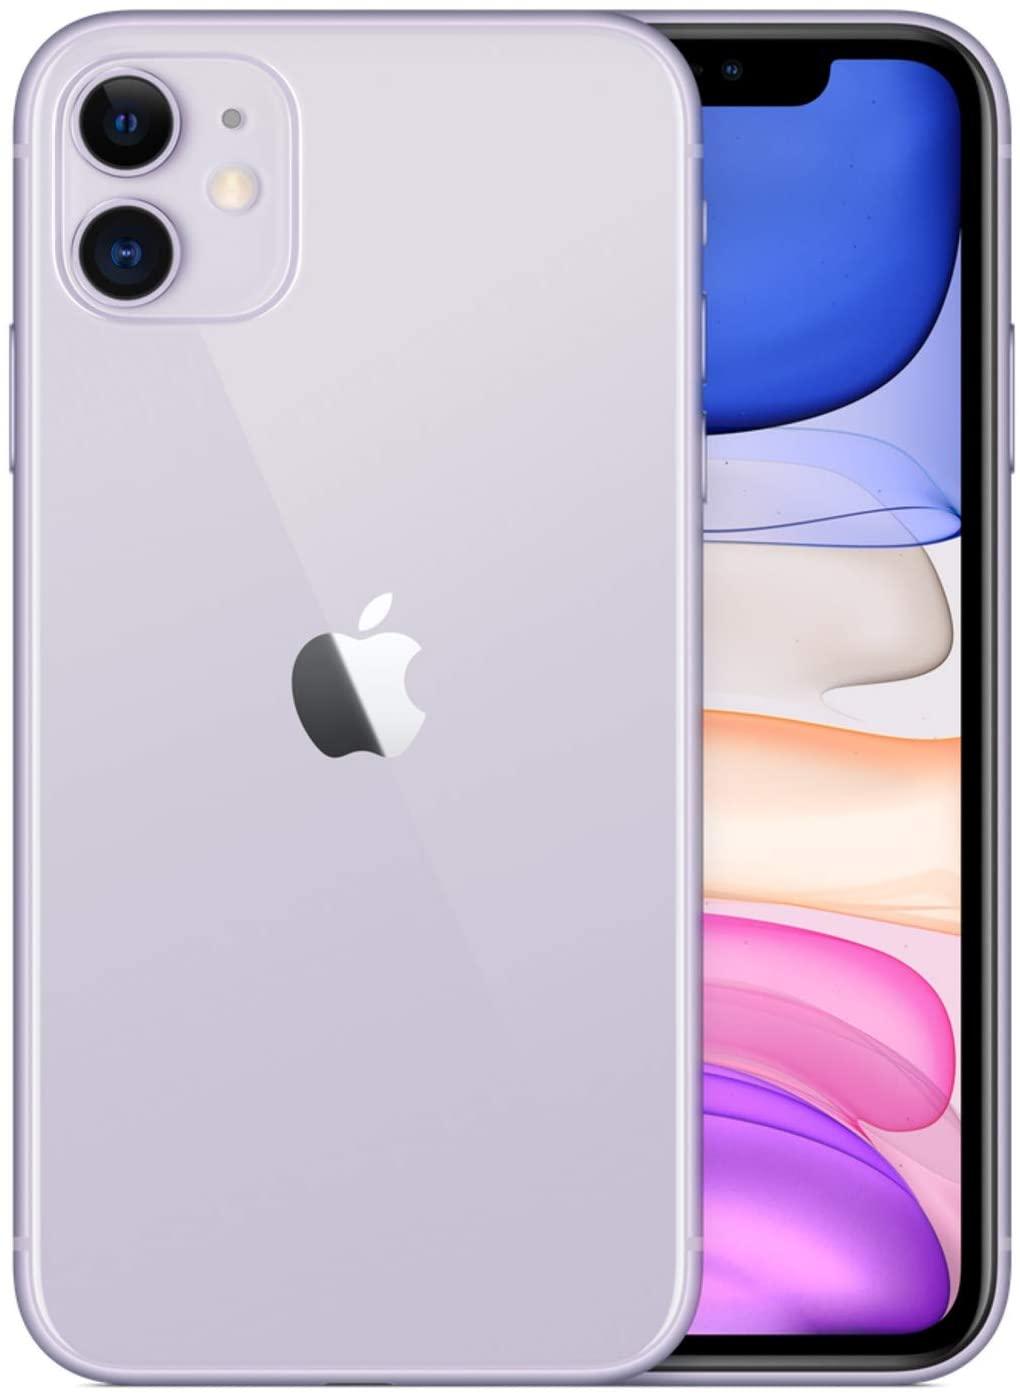 Apple iPhone 11 64GB Purpura Apple iPhone 11 Walmart en línea